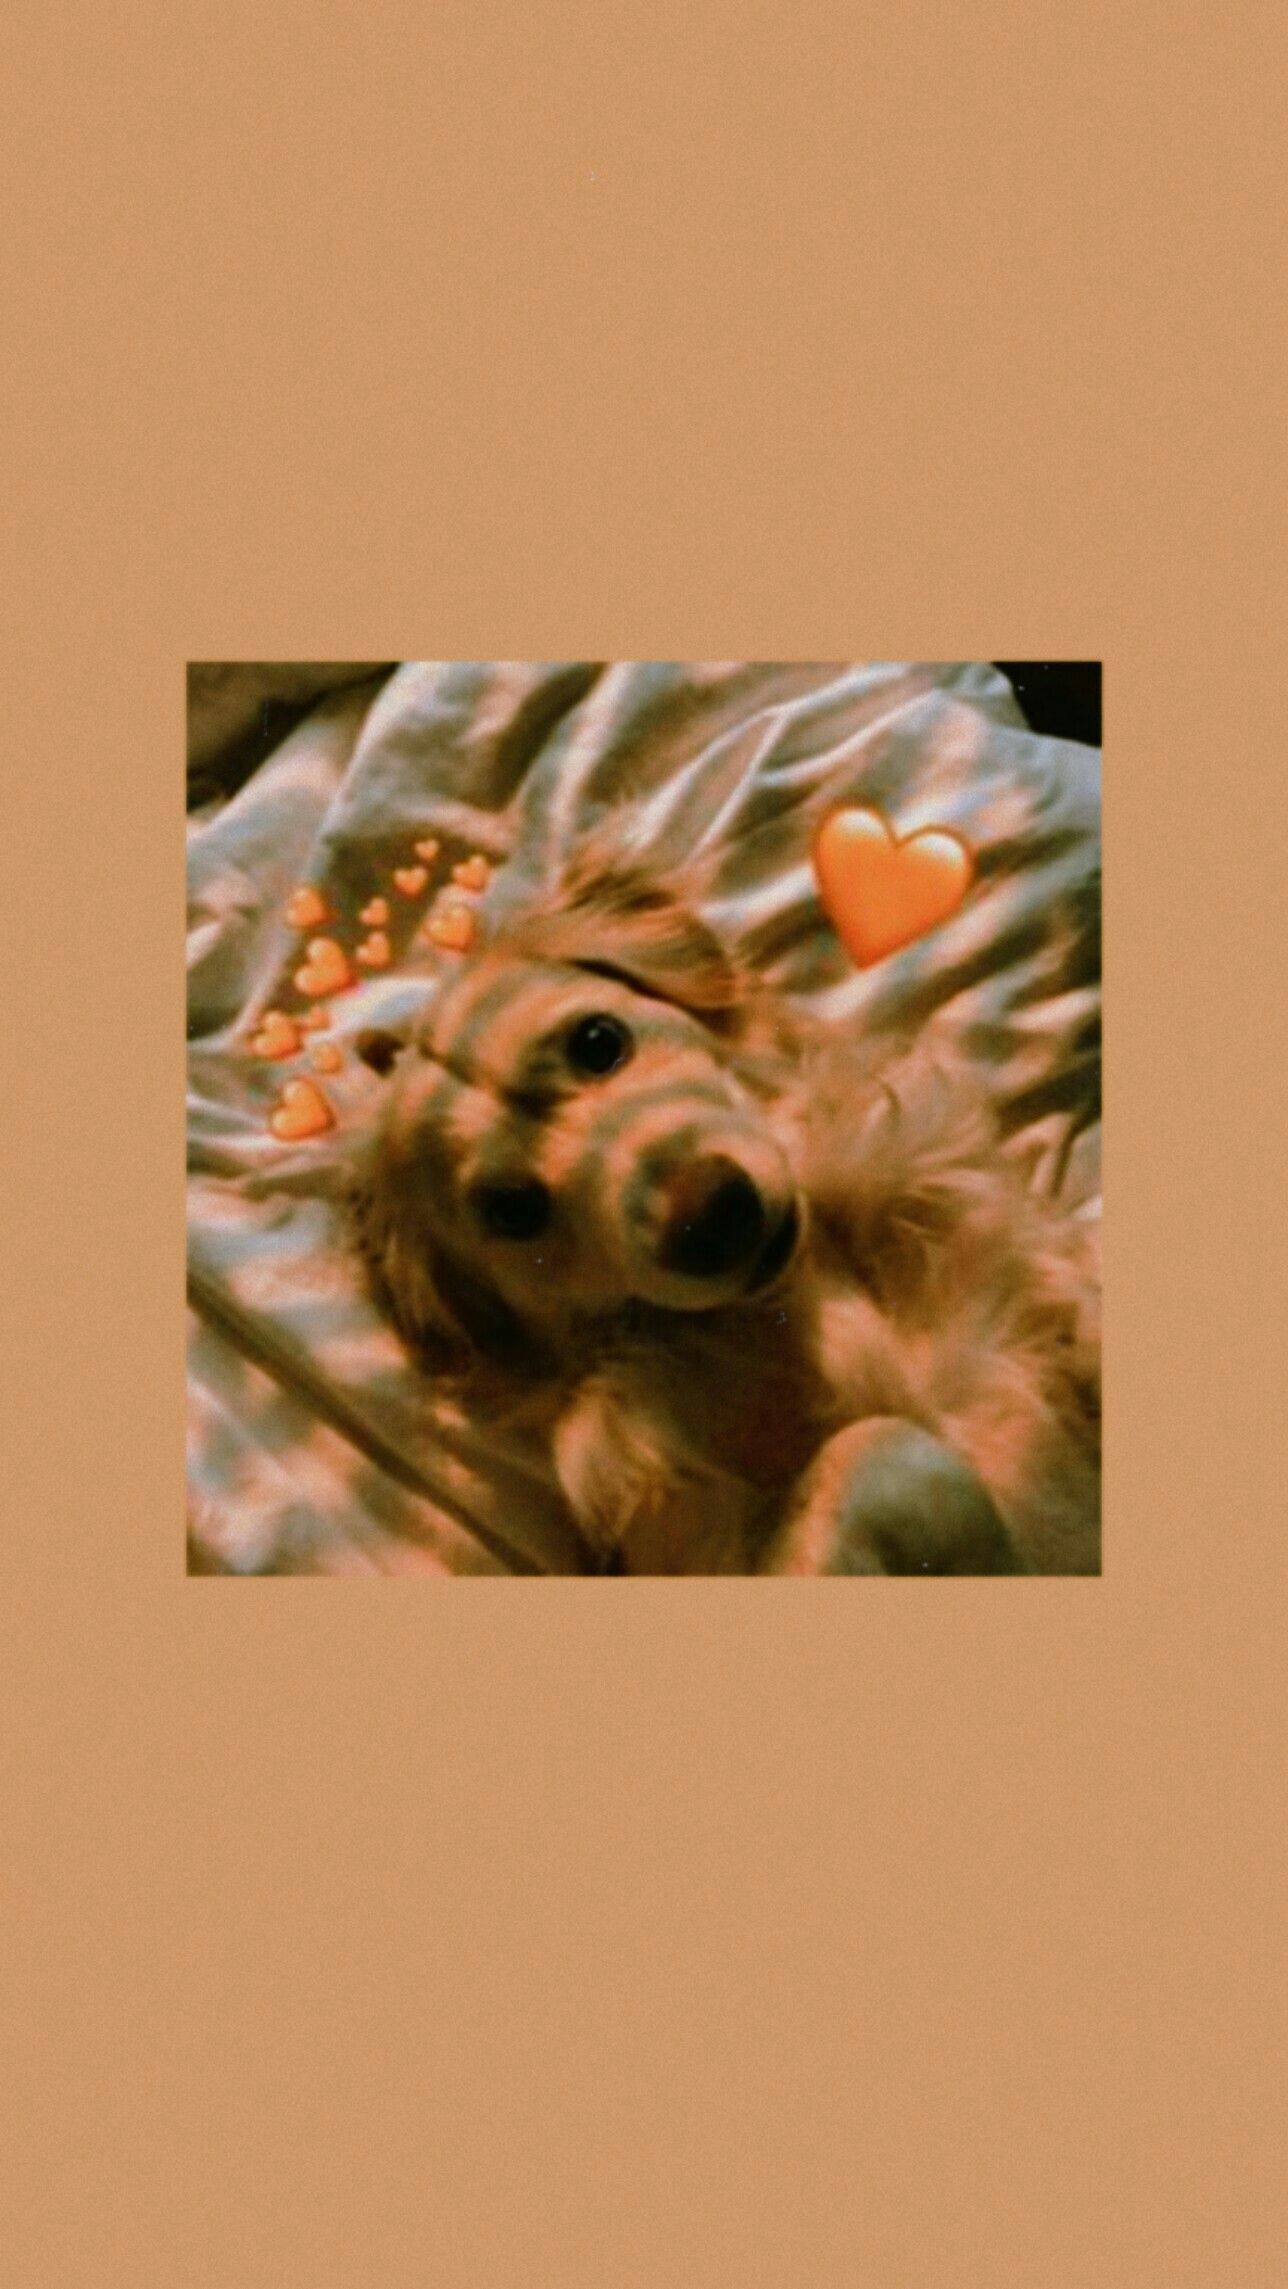  Schöne Tiere Hintergrundbild 1288x2289. Cute Aesthetic Dog Wallpaper. Cute puppy wallpaper, Puppy wallpaper iphone, Dog wallpaper